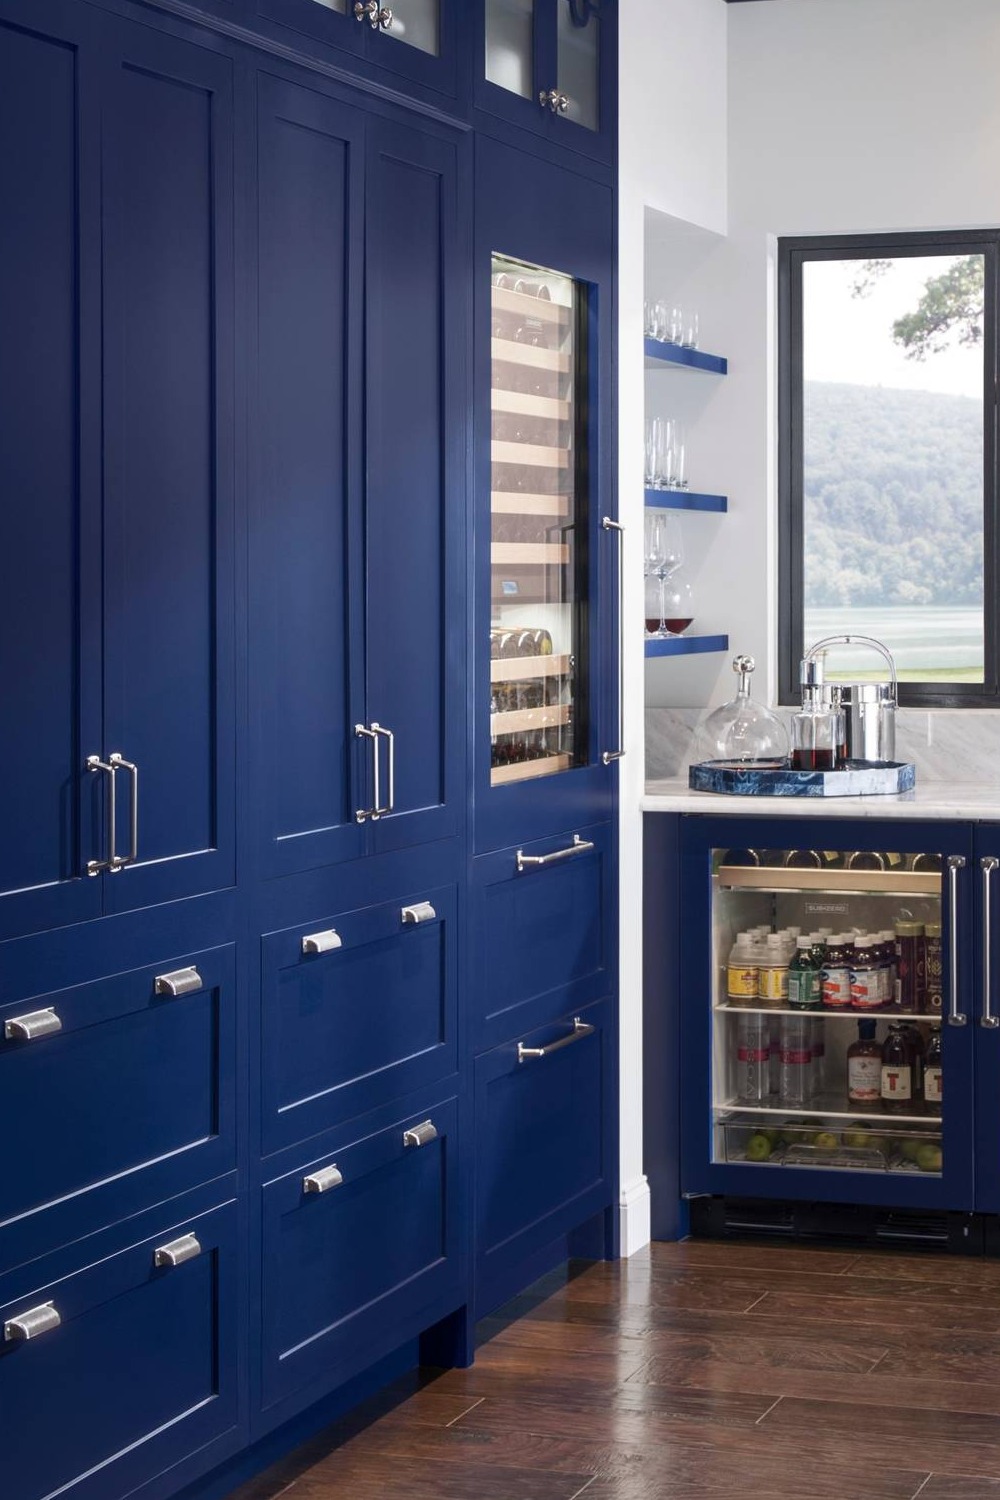 Blue Kitchen Cabinets Sleek Install Money Budget Purchase Narrow Match Quietly Wear